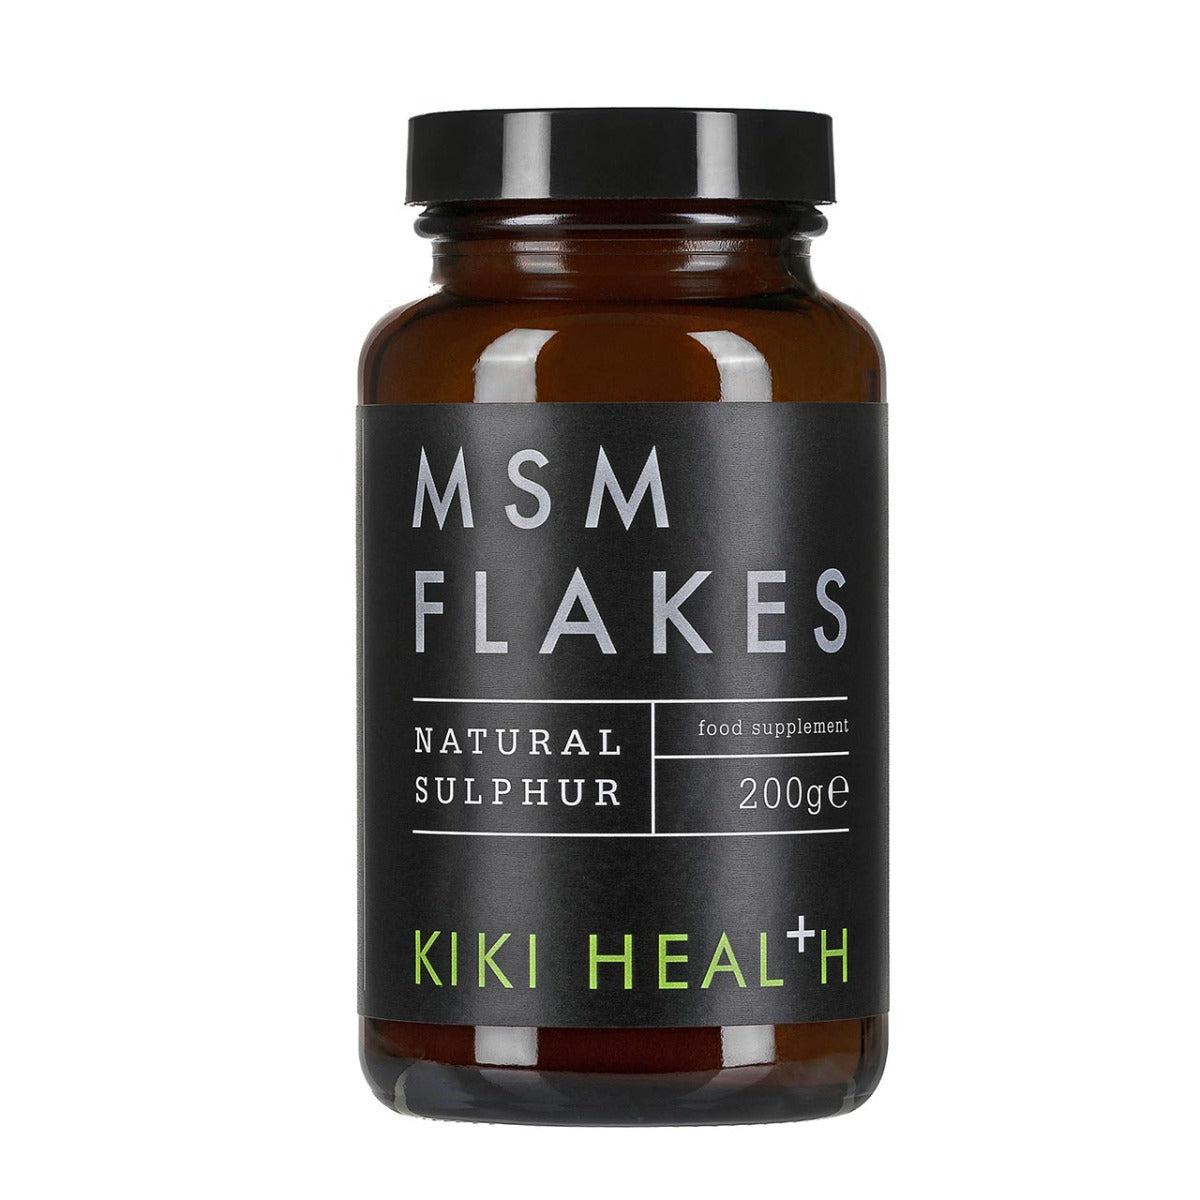 KIKI Health MSM Flakes Organic Mineral Sulphur from Methylsulfonylmethane 200g